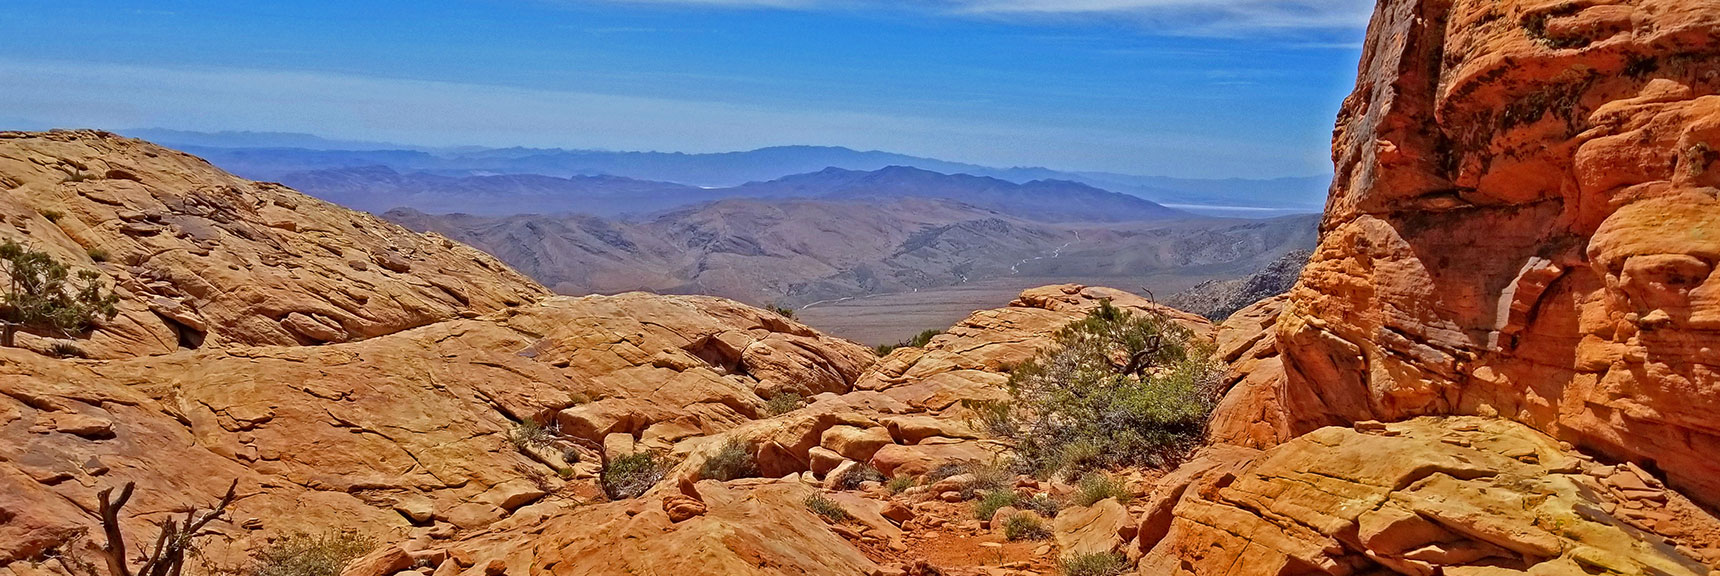 Quiet Beautiful Resting Spot Just South of Roaring Winds on Summit | Windy Peak | Rainbow Mountain Wilderness, Nevada